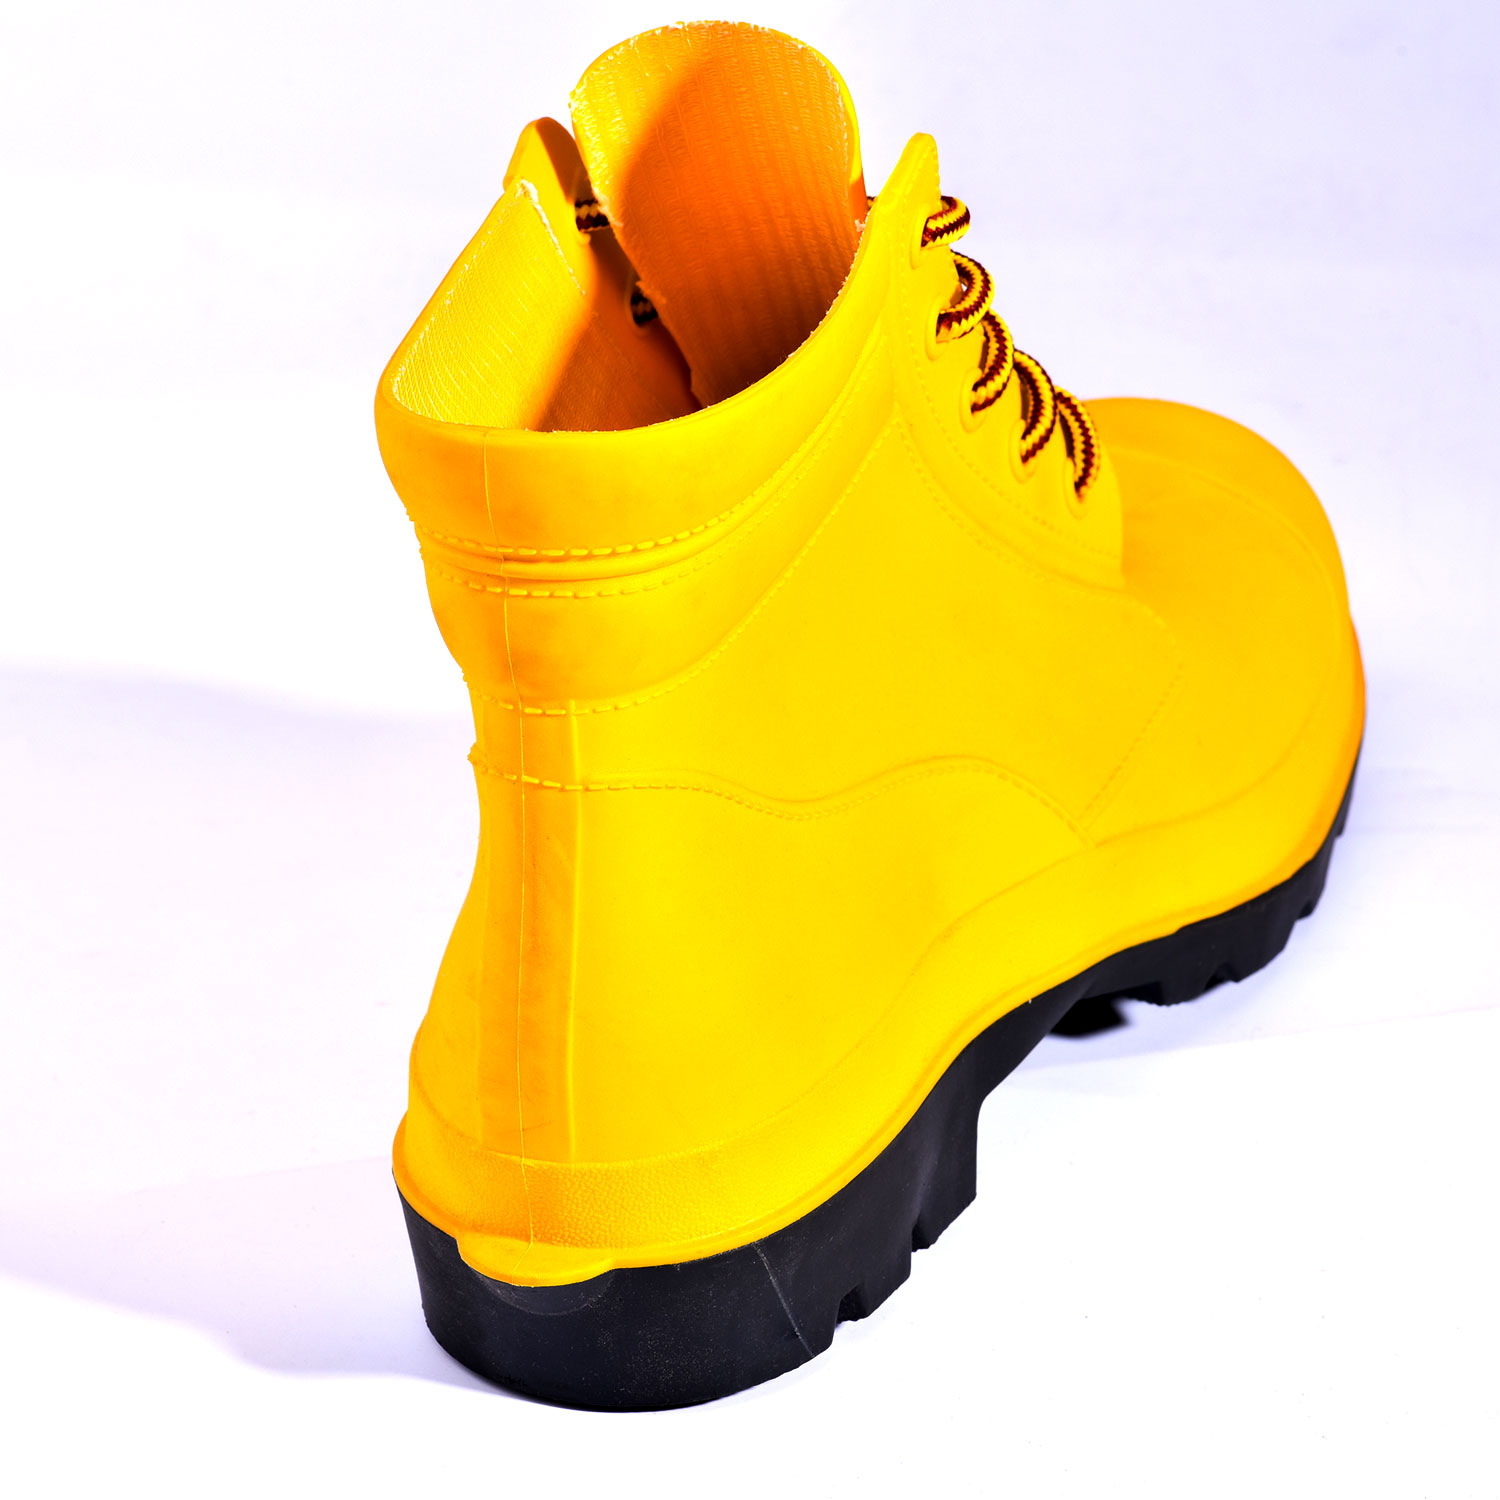 Steel Toe Rain Boots W-6050 Yellow